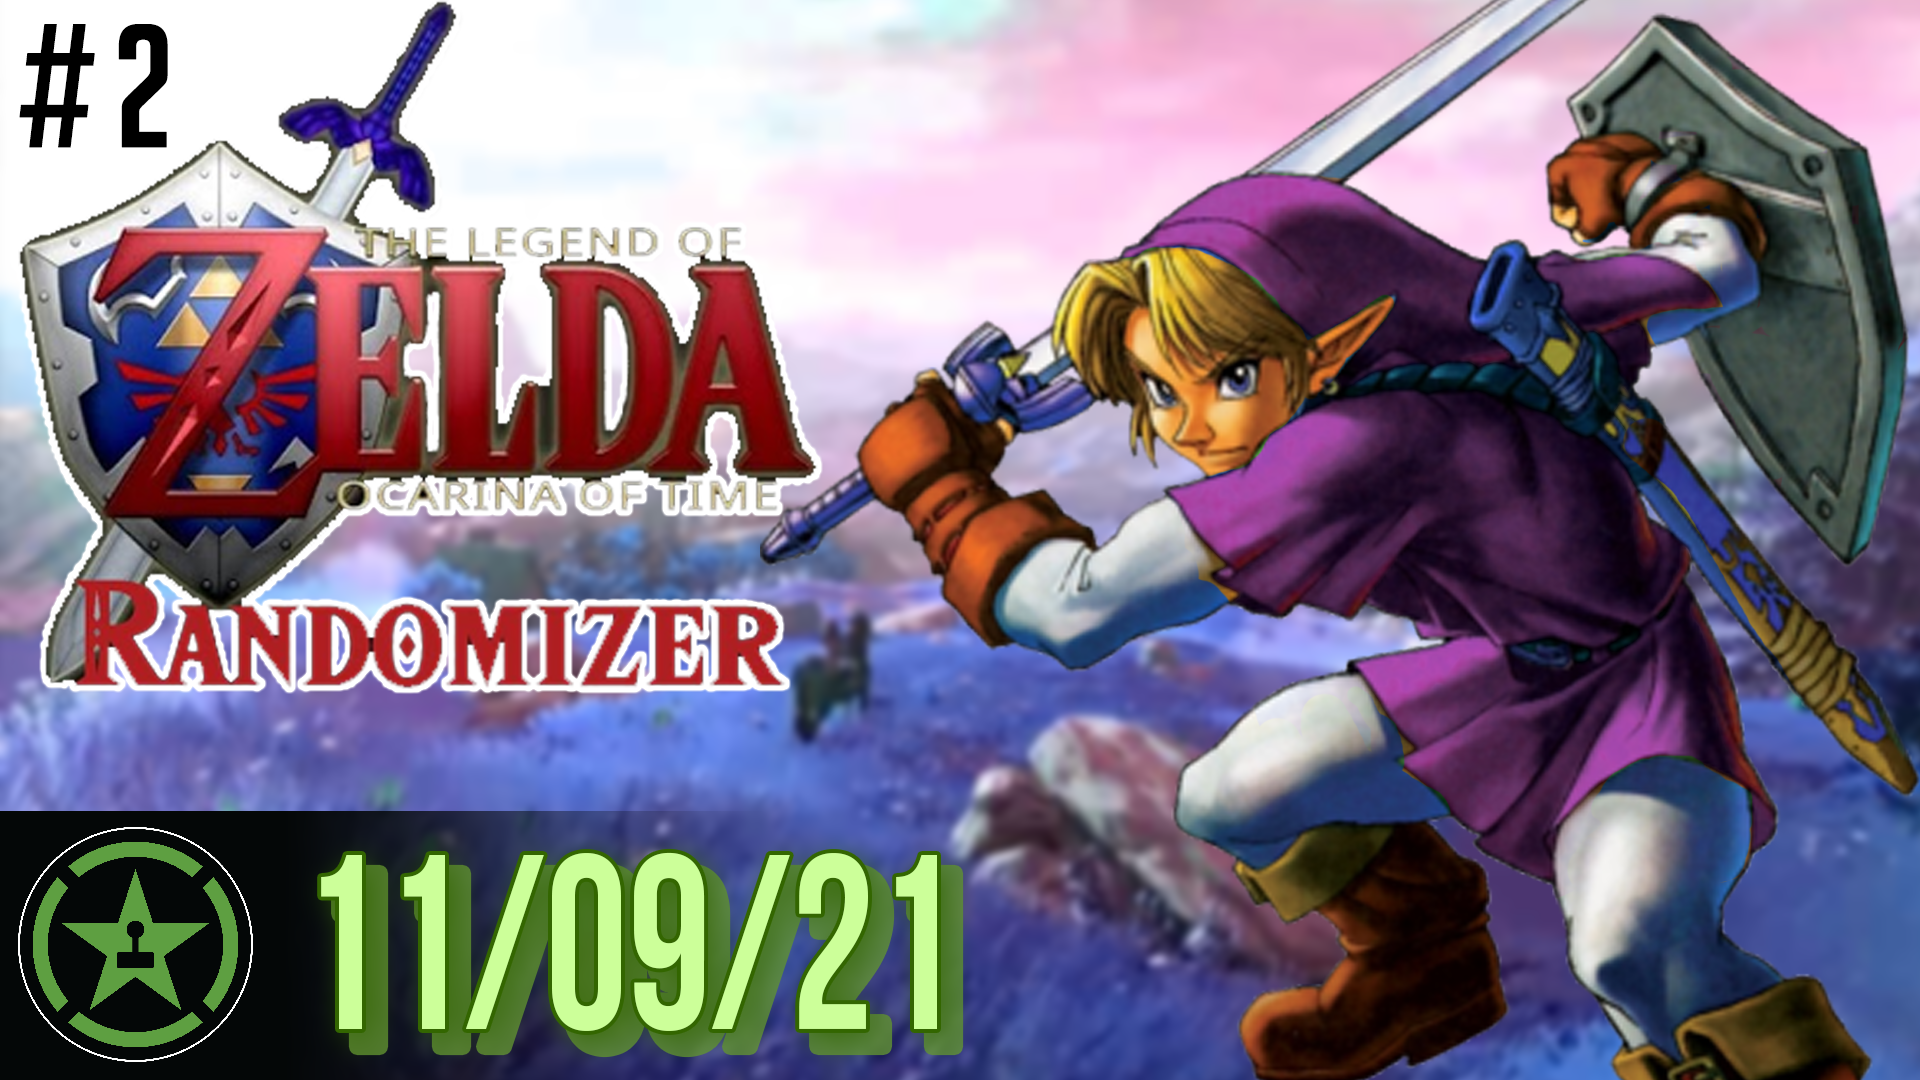 The Legend of Zelda: Ocarina of Time Randomizer, Part 3